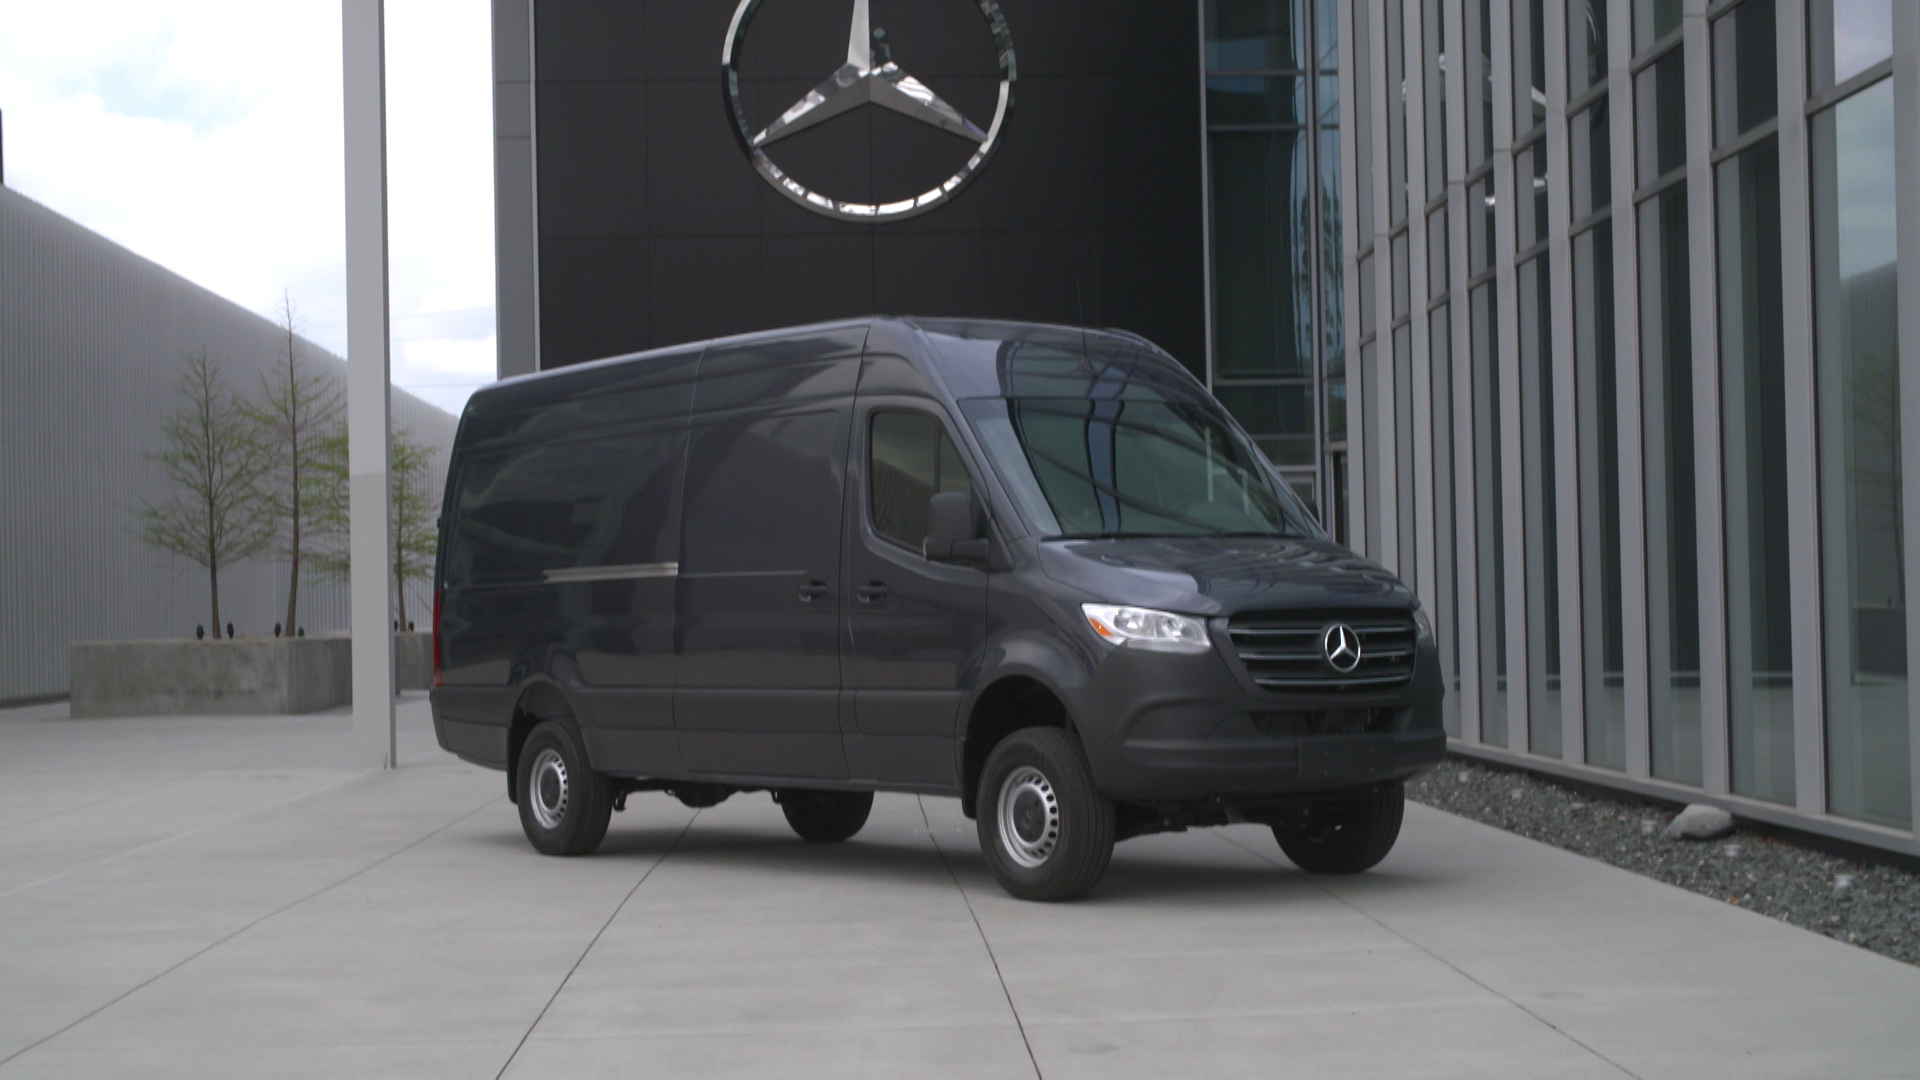 The Mercedes-Benz Sprinter Van is an Ergonomic Designed Vehicle